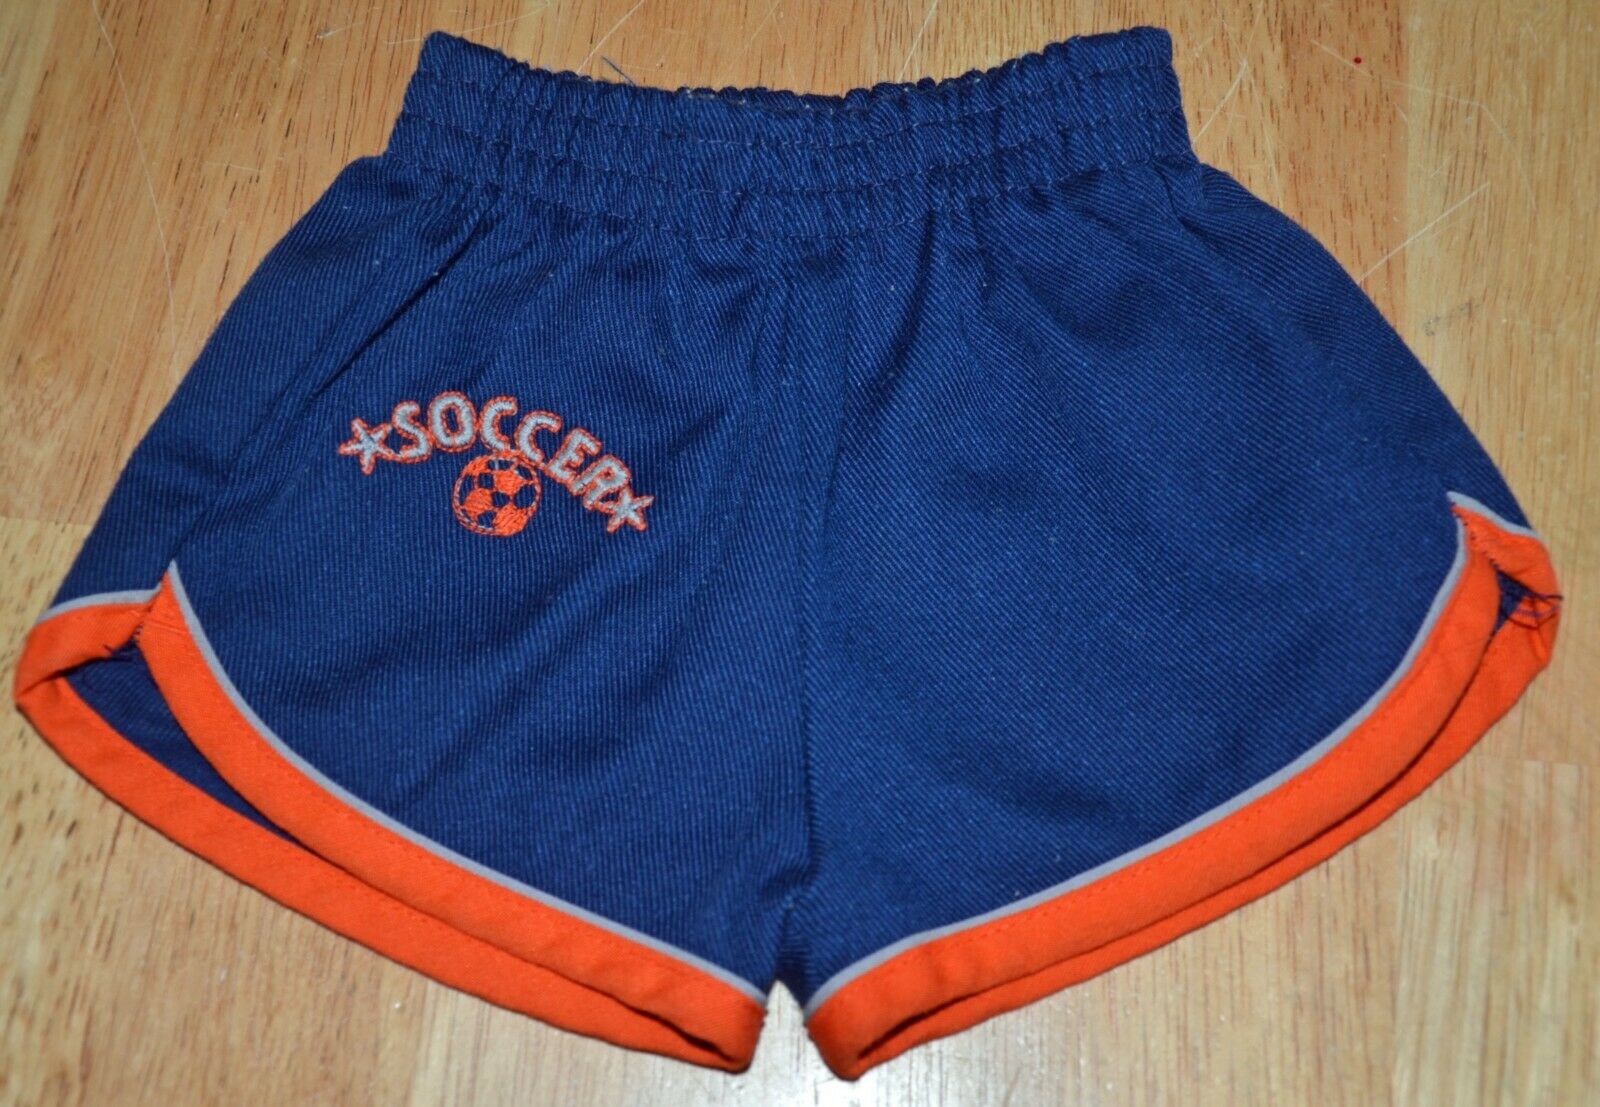 Vintage Child's Health-tex Blue Gray & Orange Shorts W Soccer Design Size 2t Guc